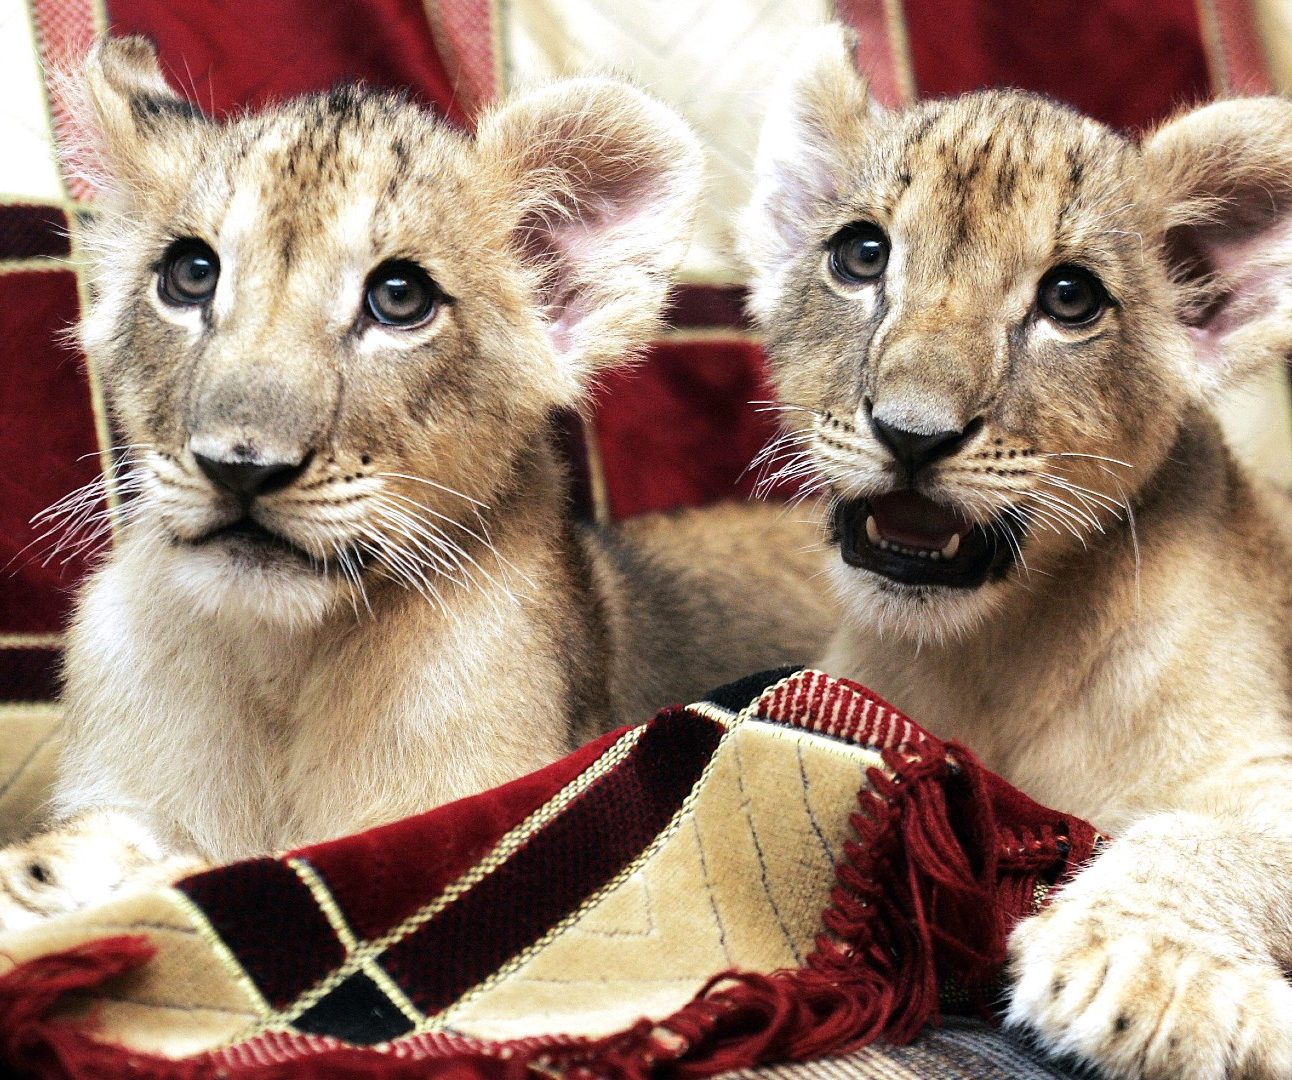 Two lion cubs lying on a tartan blanket